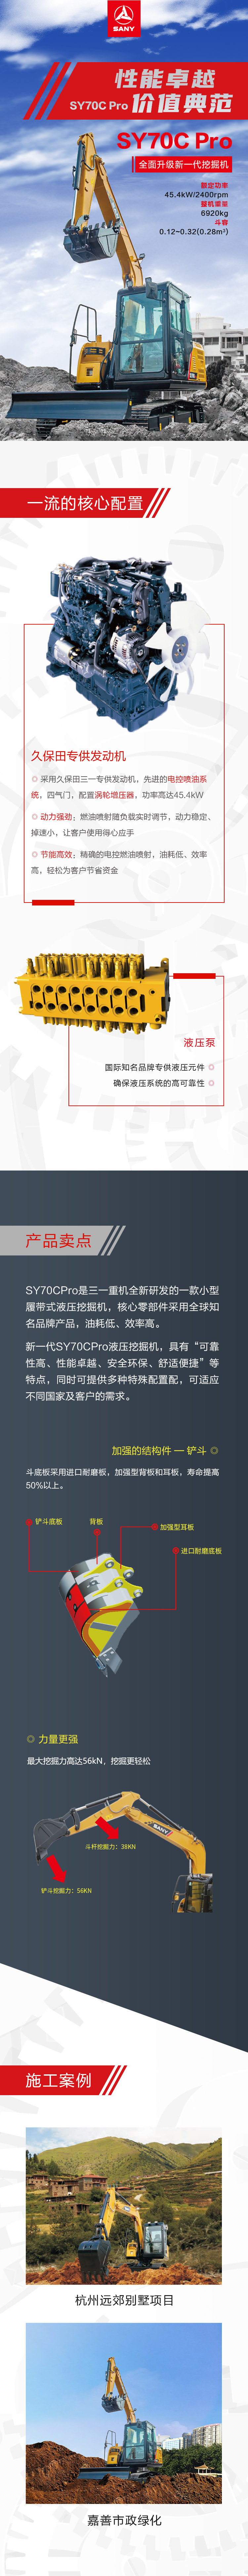 SY70C Pro.jpg